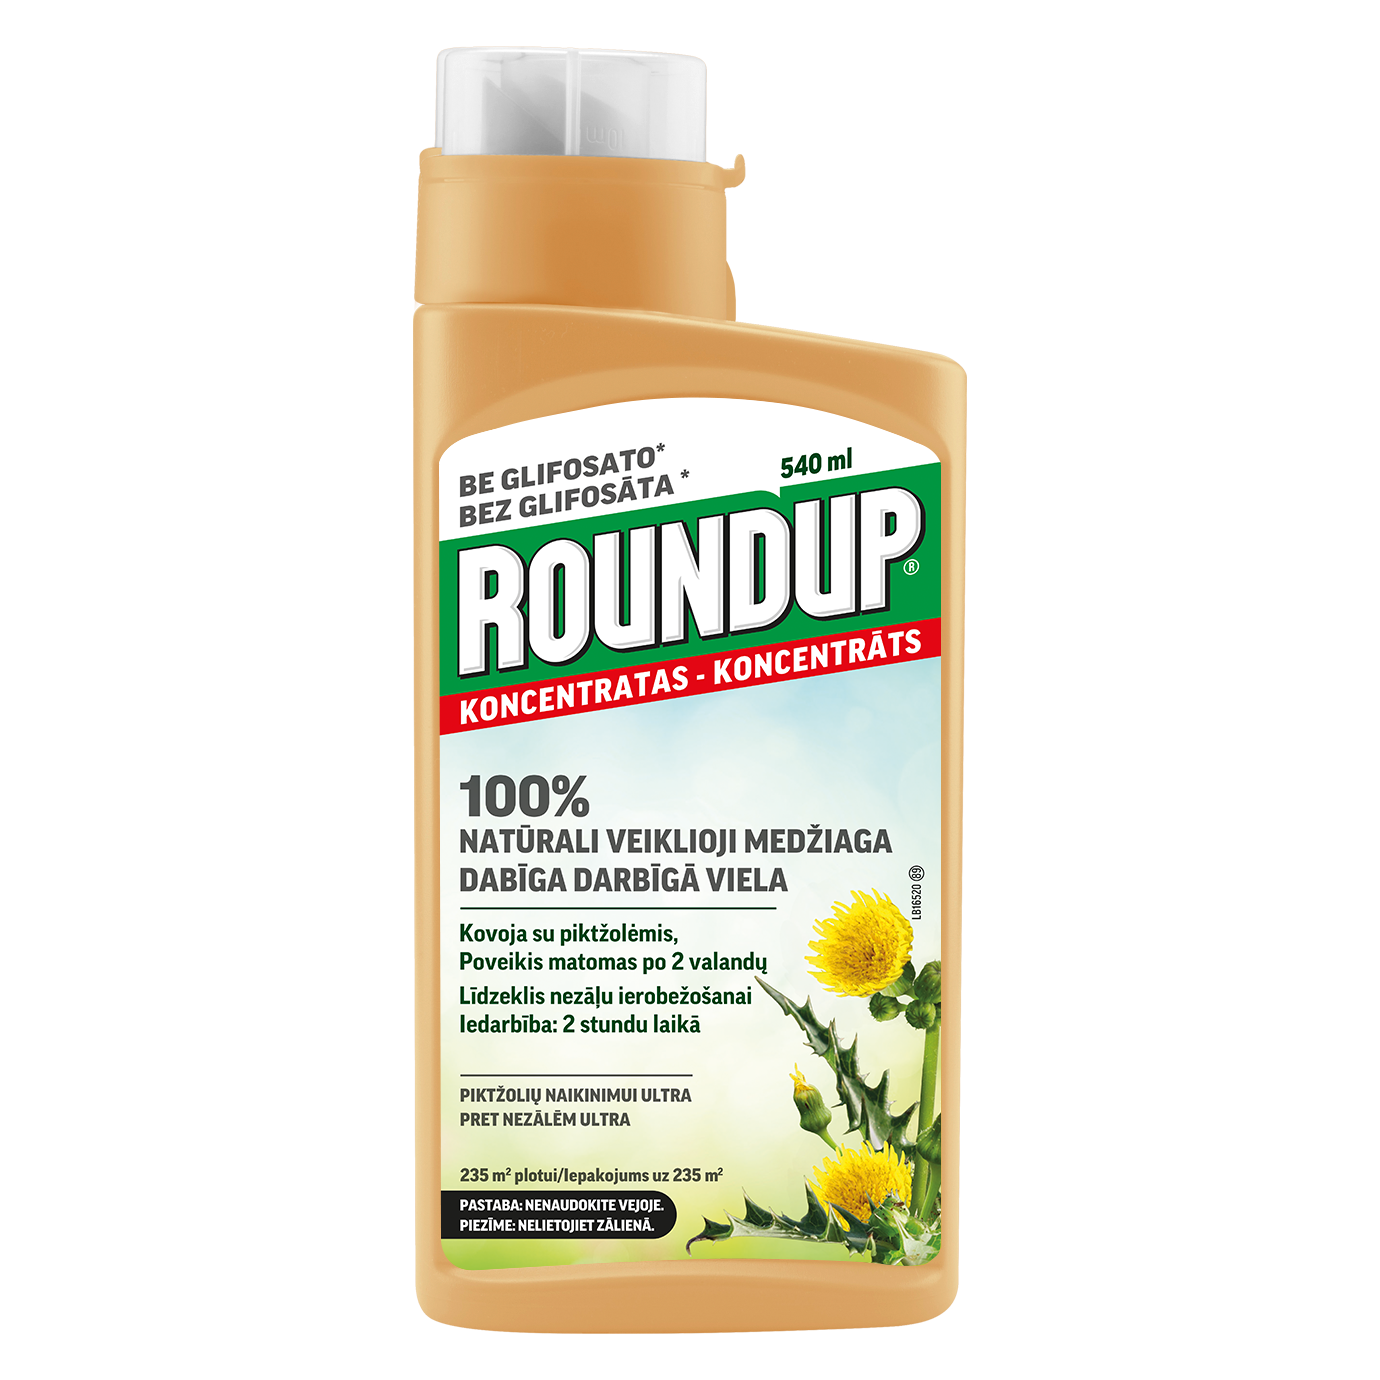 Herbicidas ROUNDUP BIO, 540 ml